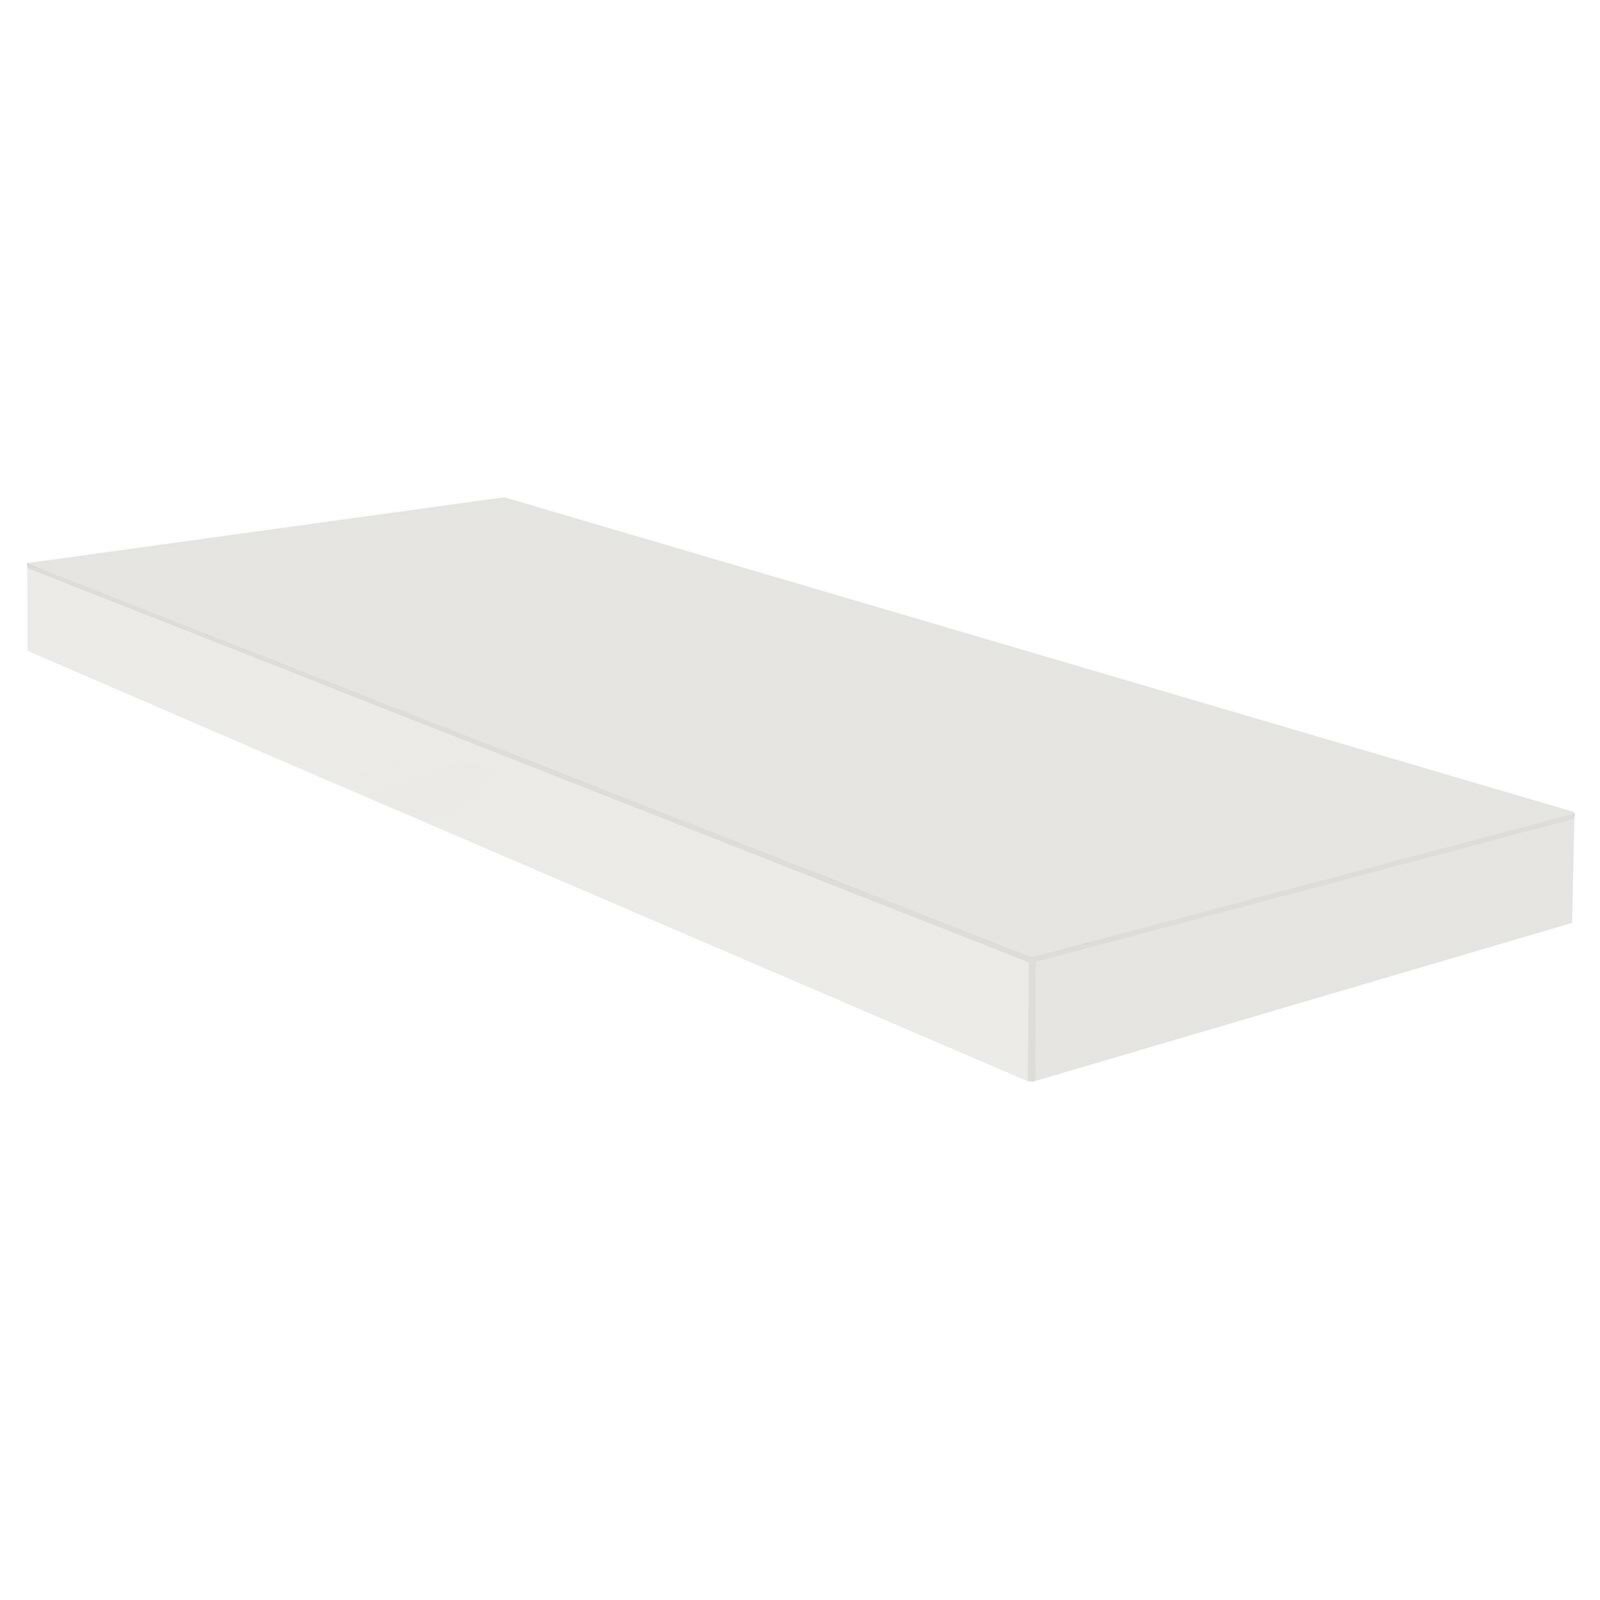 Wandboard - weiß matt - 60 cm | Online bei ROLLER kaufen